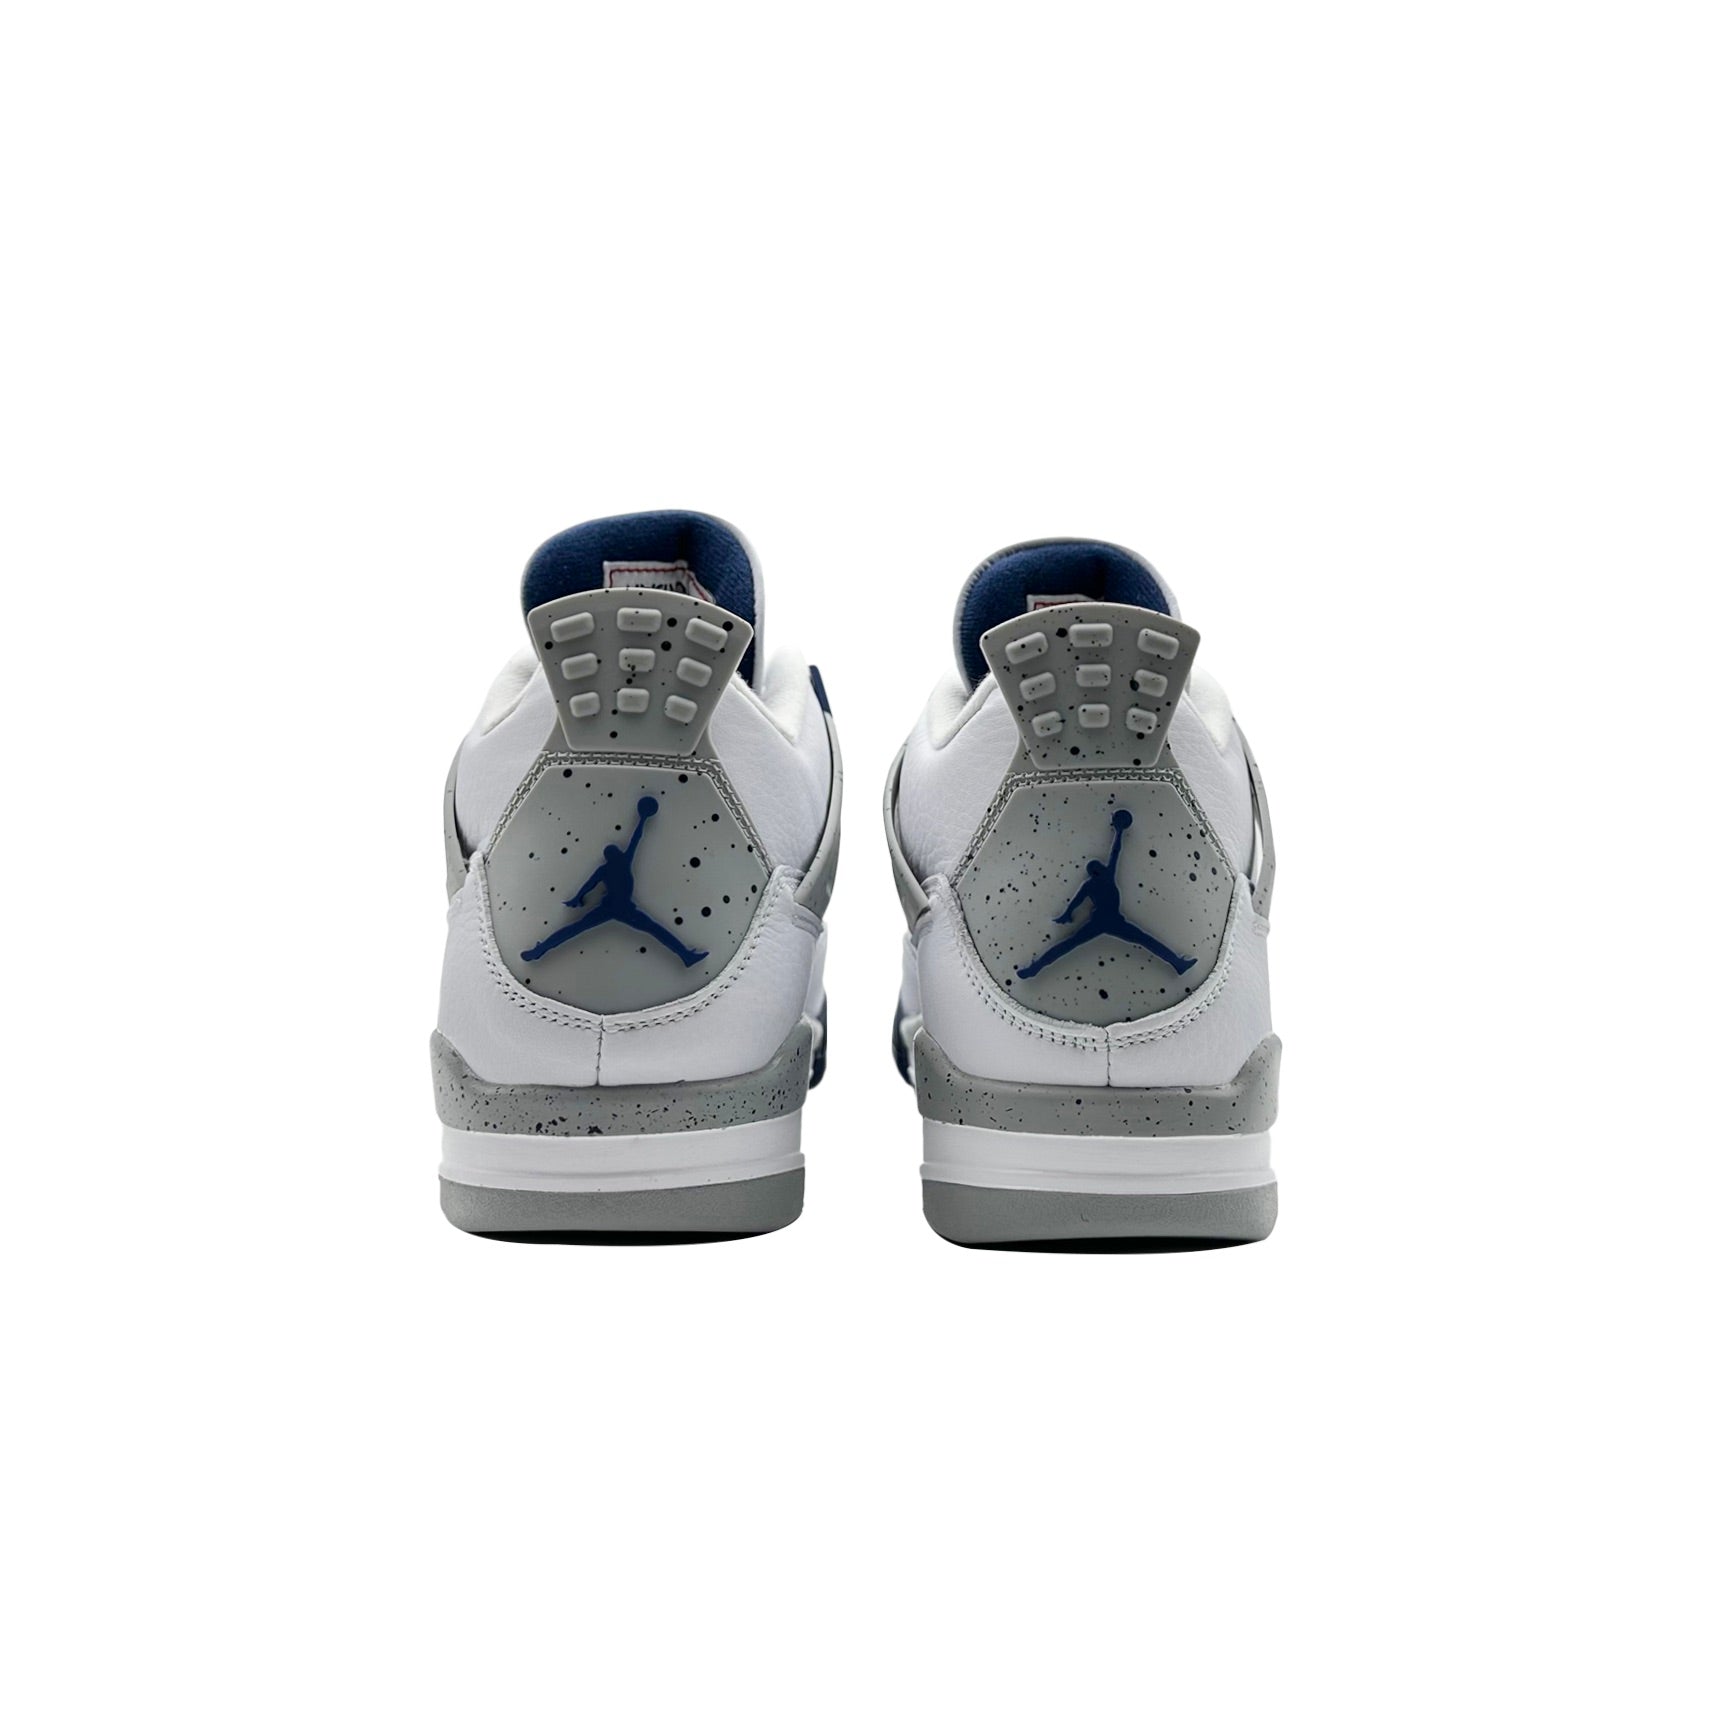 Nike Air Jordan 4 Retro Midnight Navy